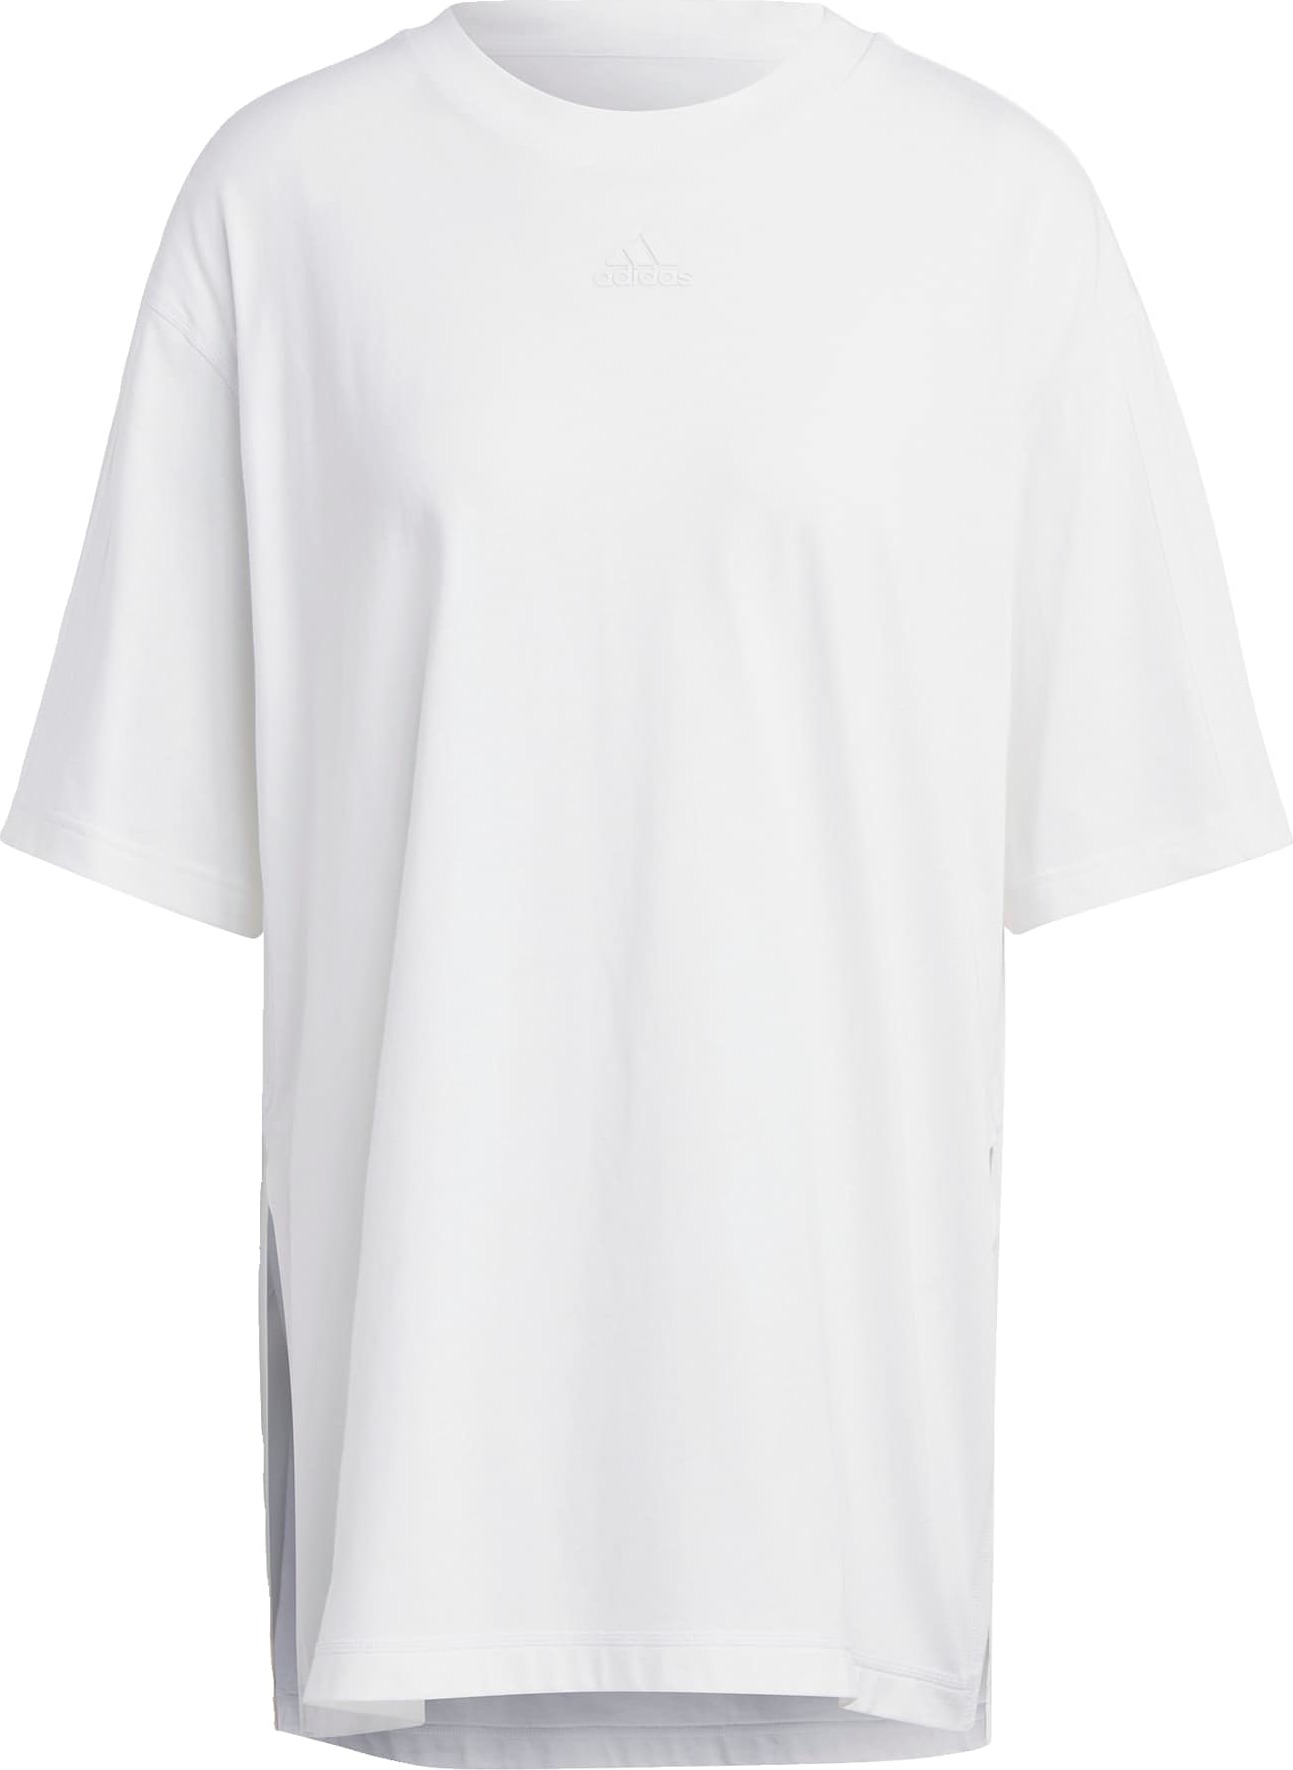 ADIDAS SPORTSWEAR Funkční tričko bílá